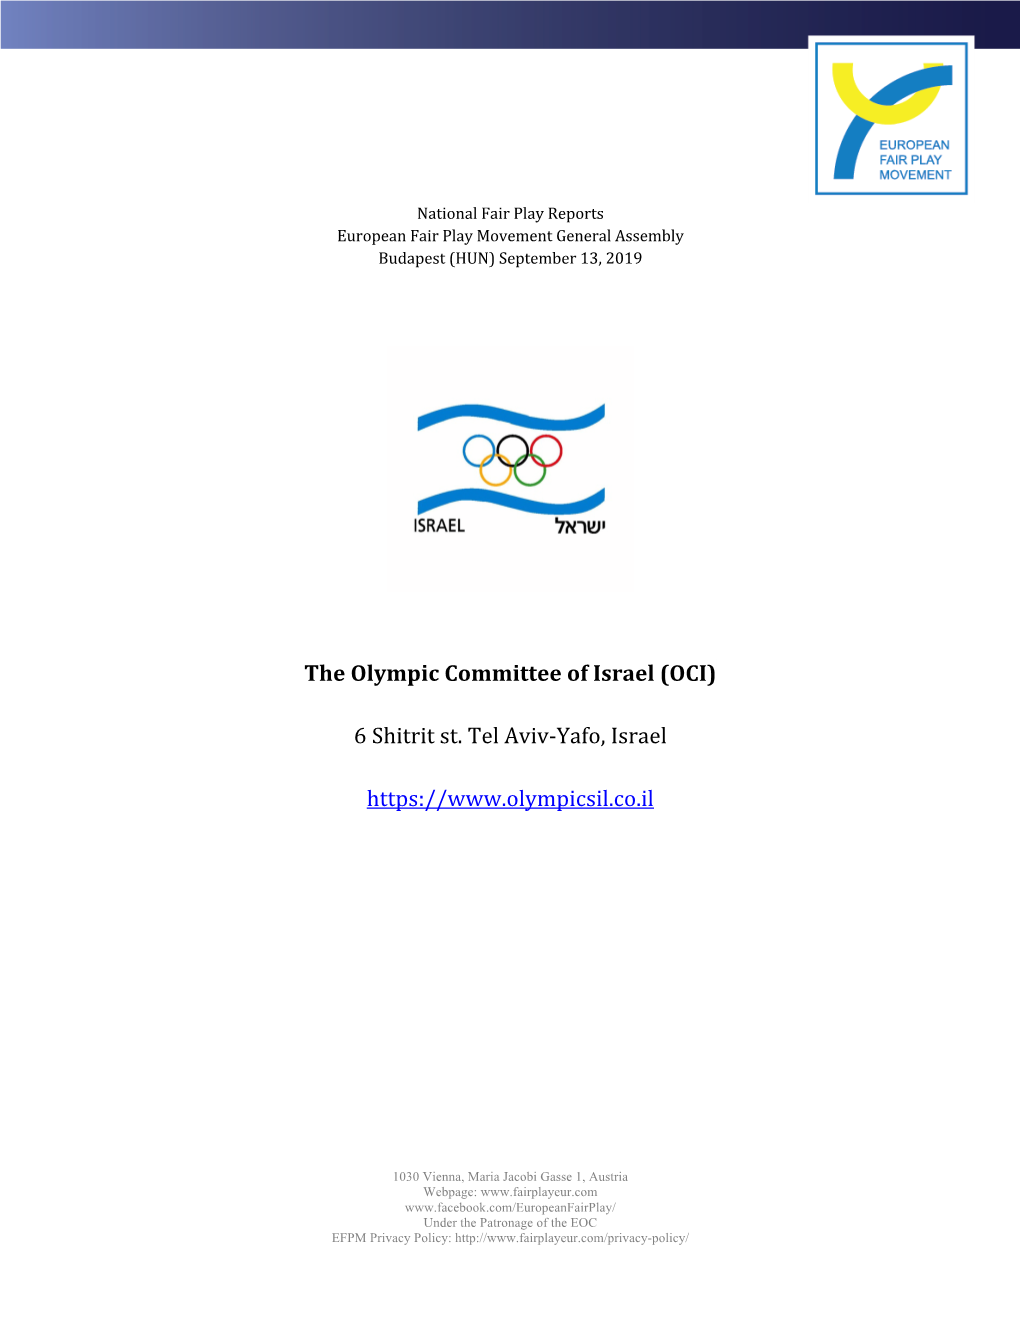 The Olympic Committee of Israel (OCI) 6 Shitrit St. Tel Aviv-Yafo